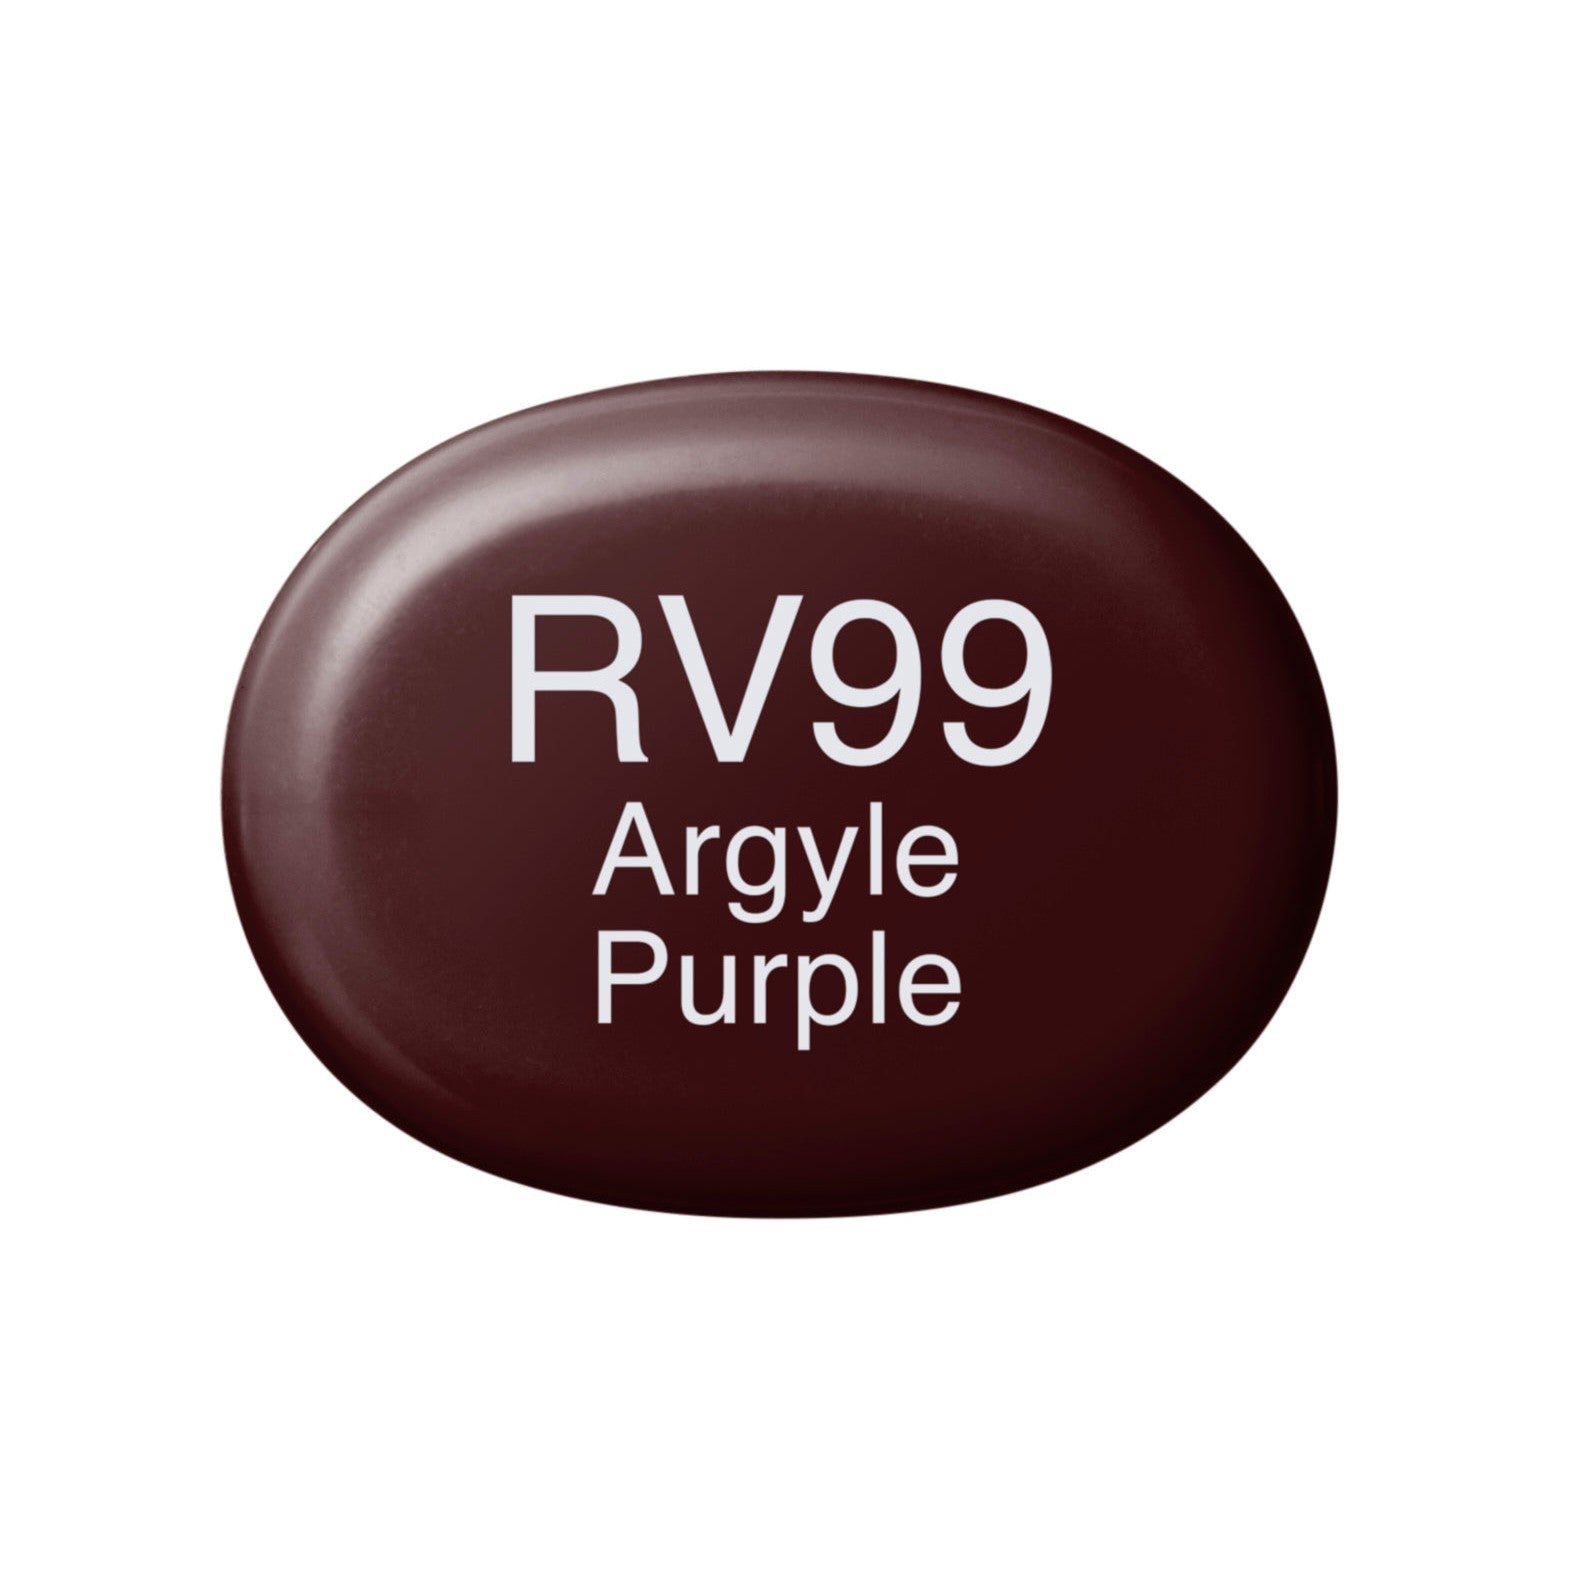 Copic - Sketch Marker - Argyle Purple - RV99-ScrapbookPal